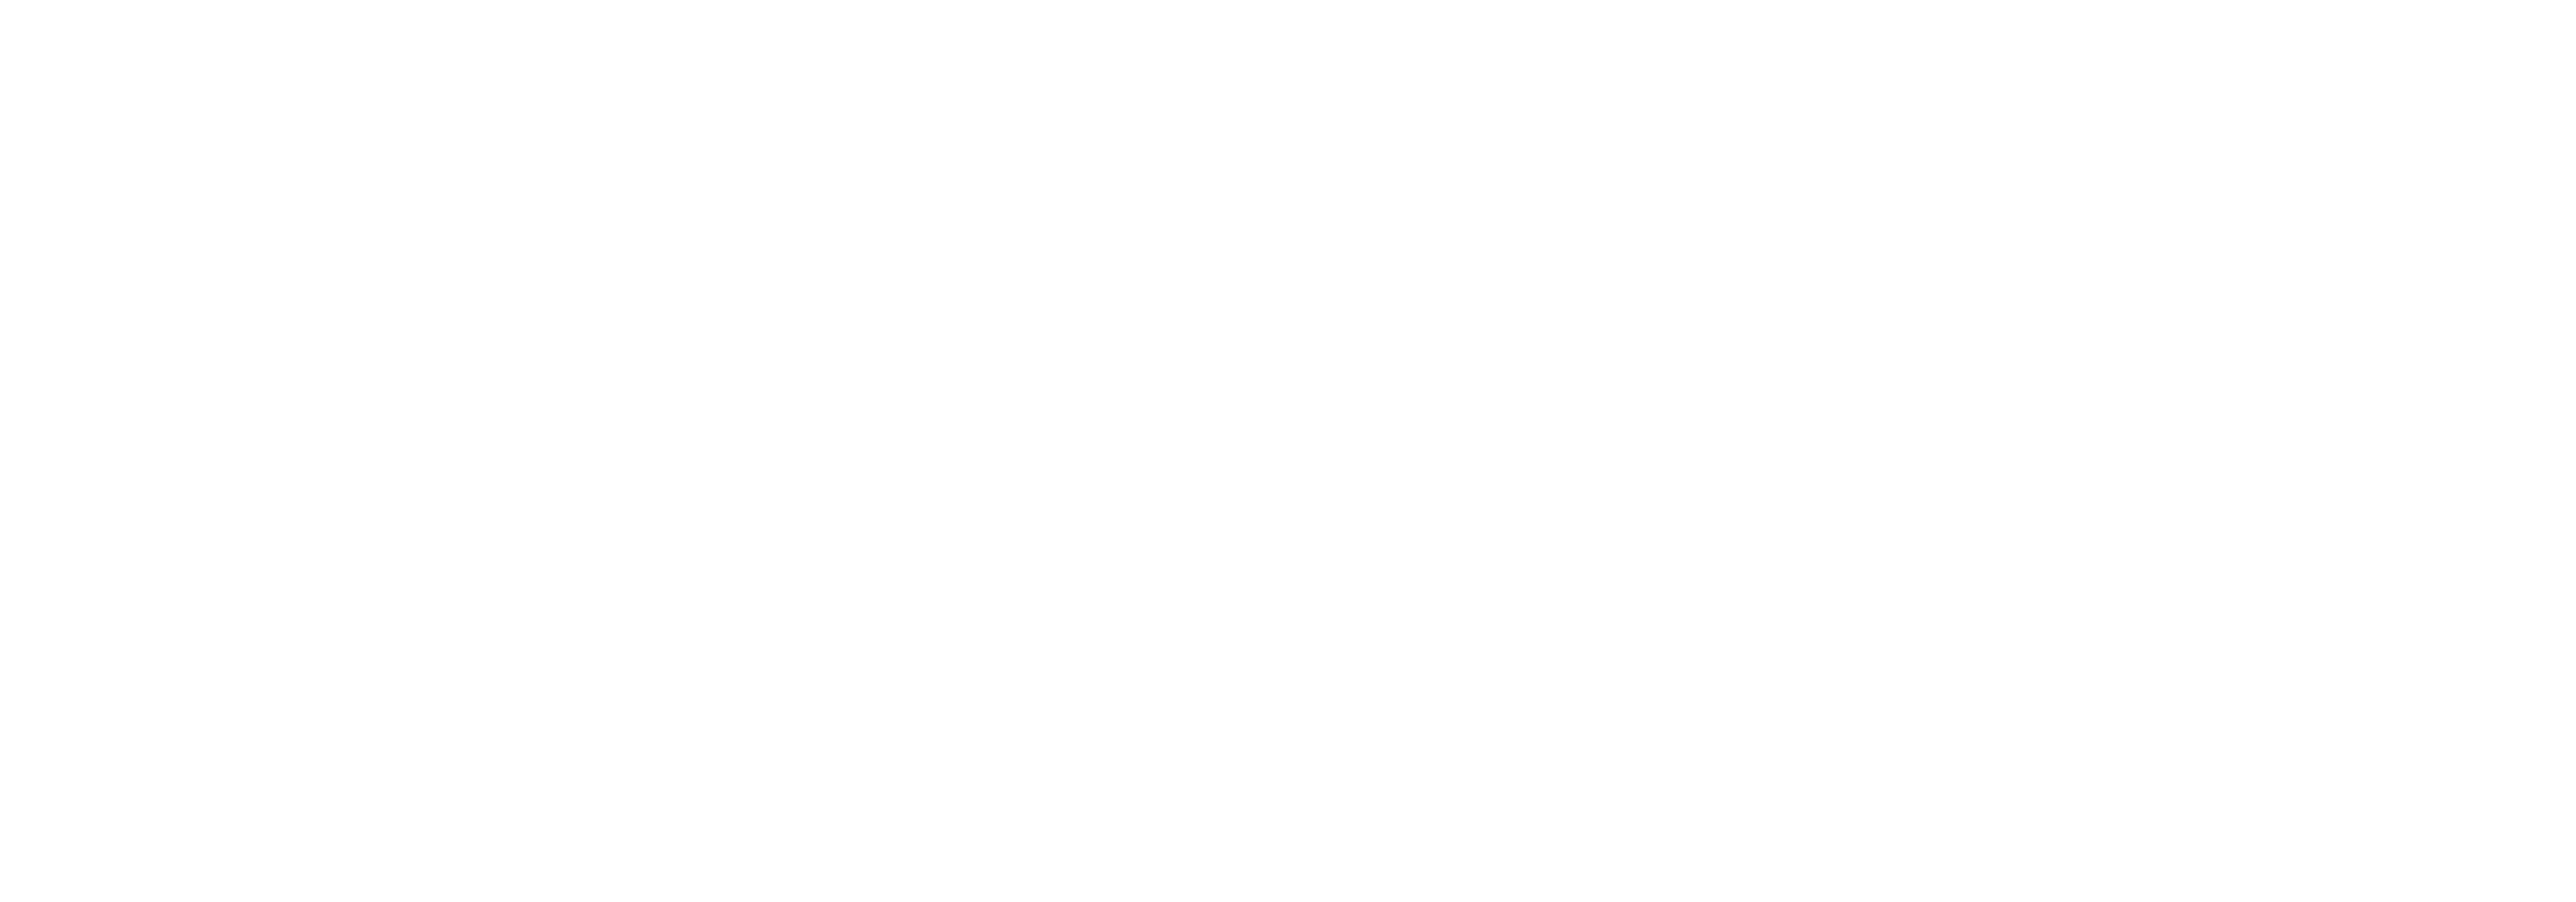 Mernowie Poll Merinos